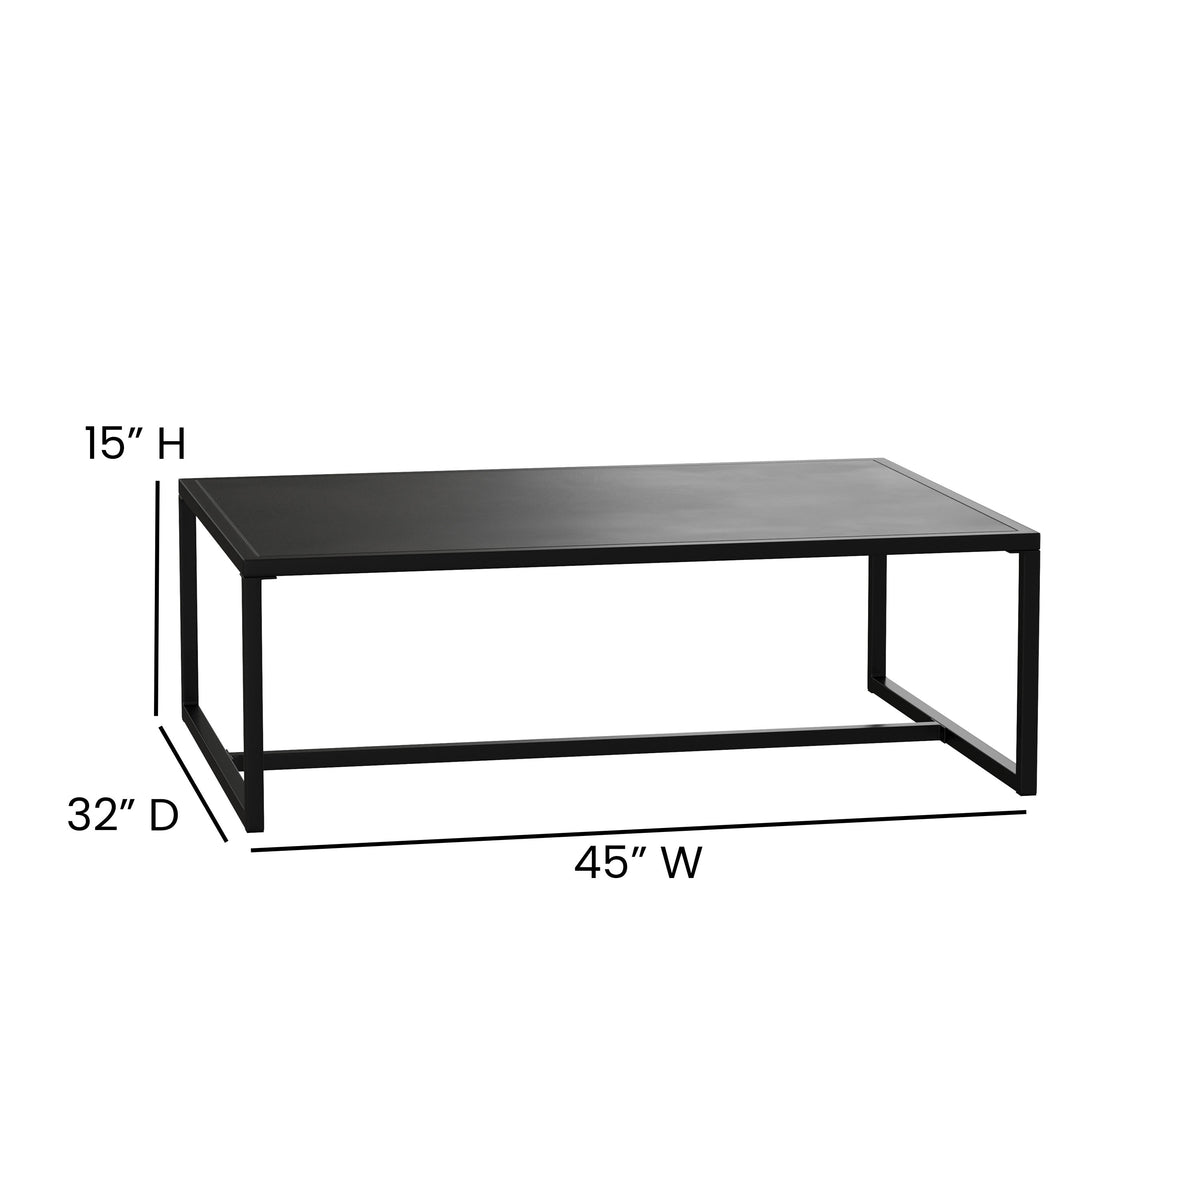 All-Weather Commercial Grade Indoor/Outdoor Steel Patio Coffee Table in Black